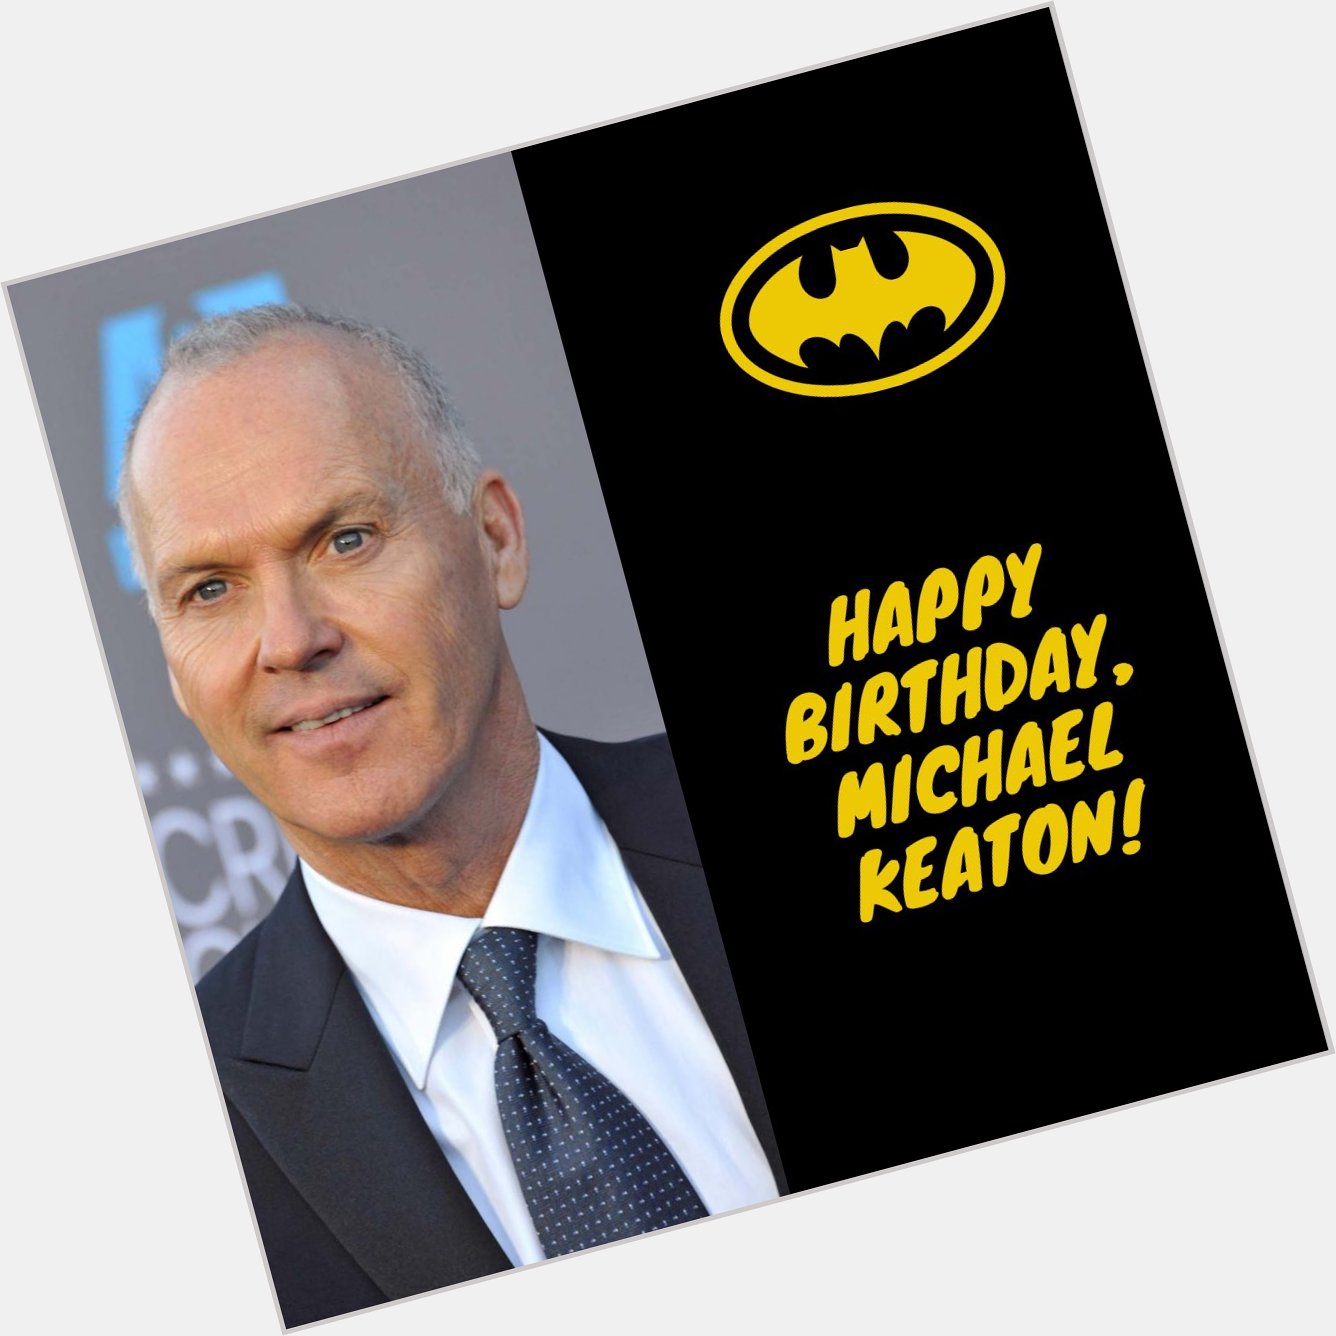 Happy birthday Batma- I mean a Michael Keaton   